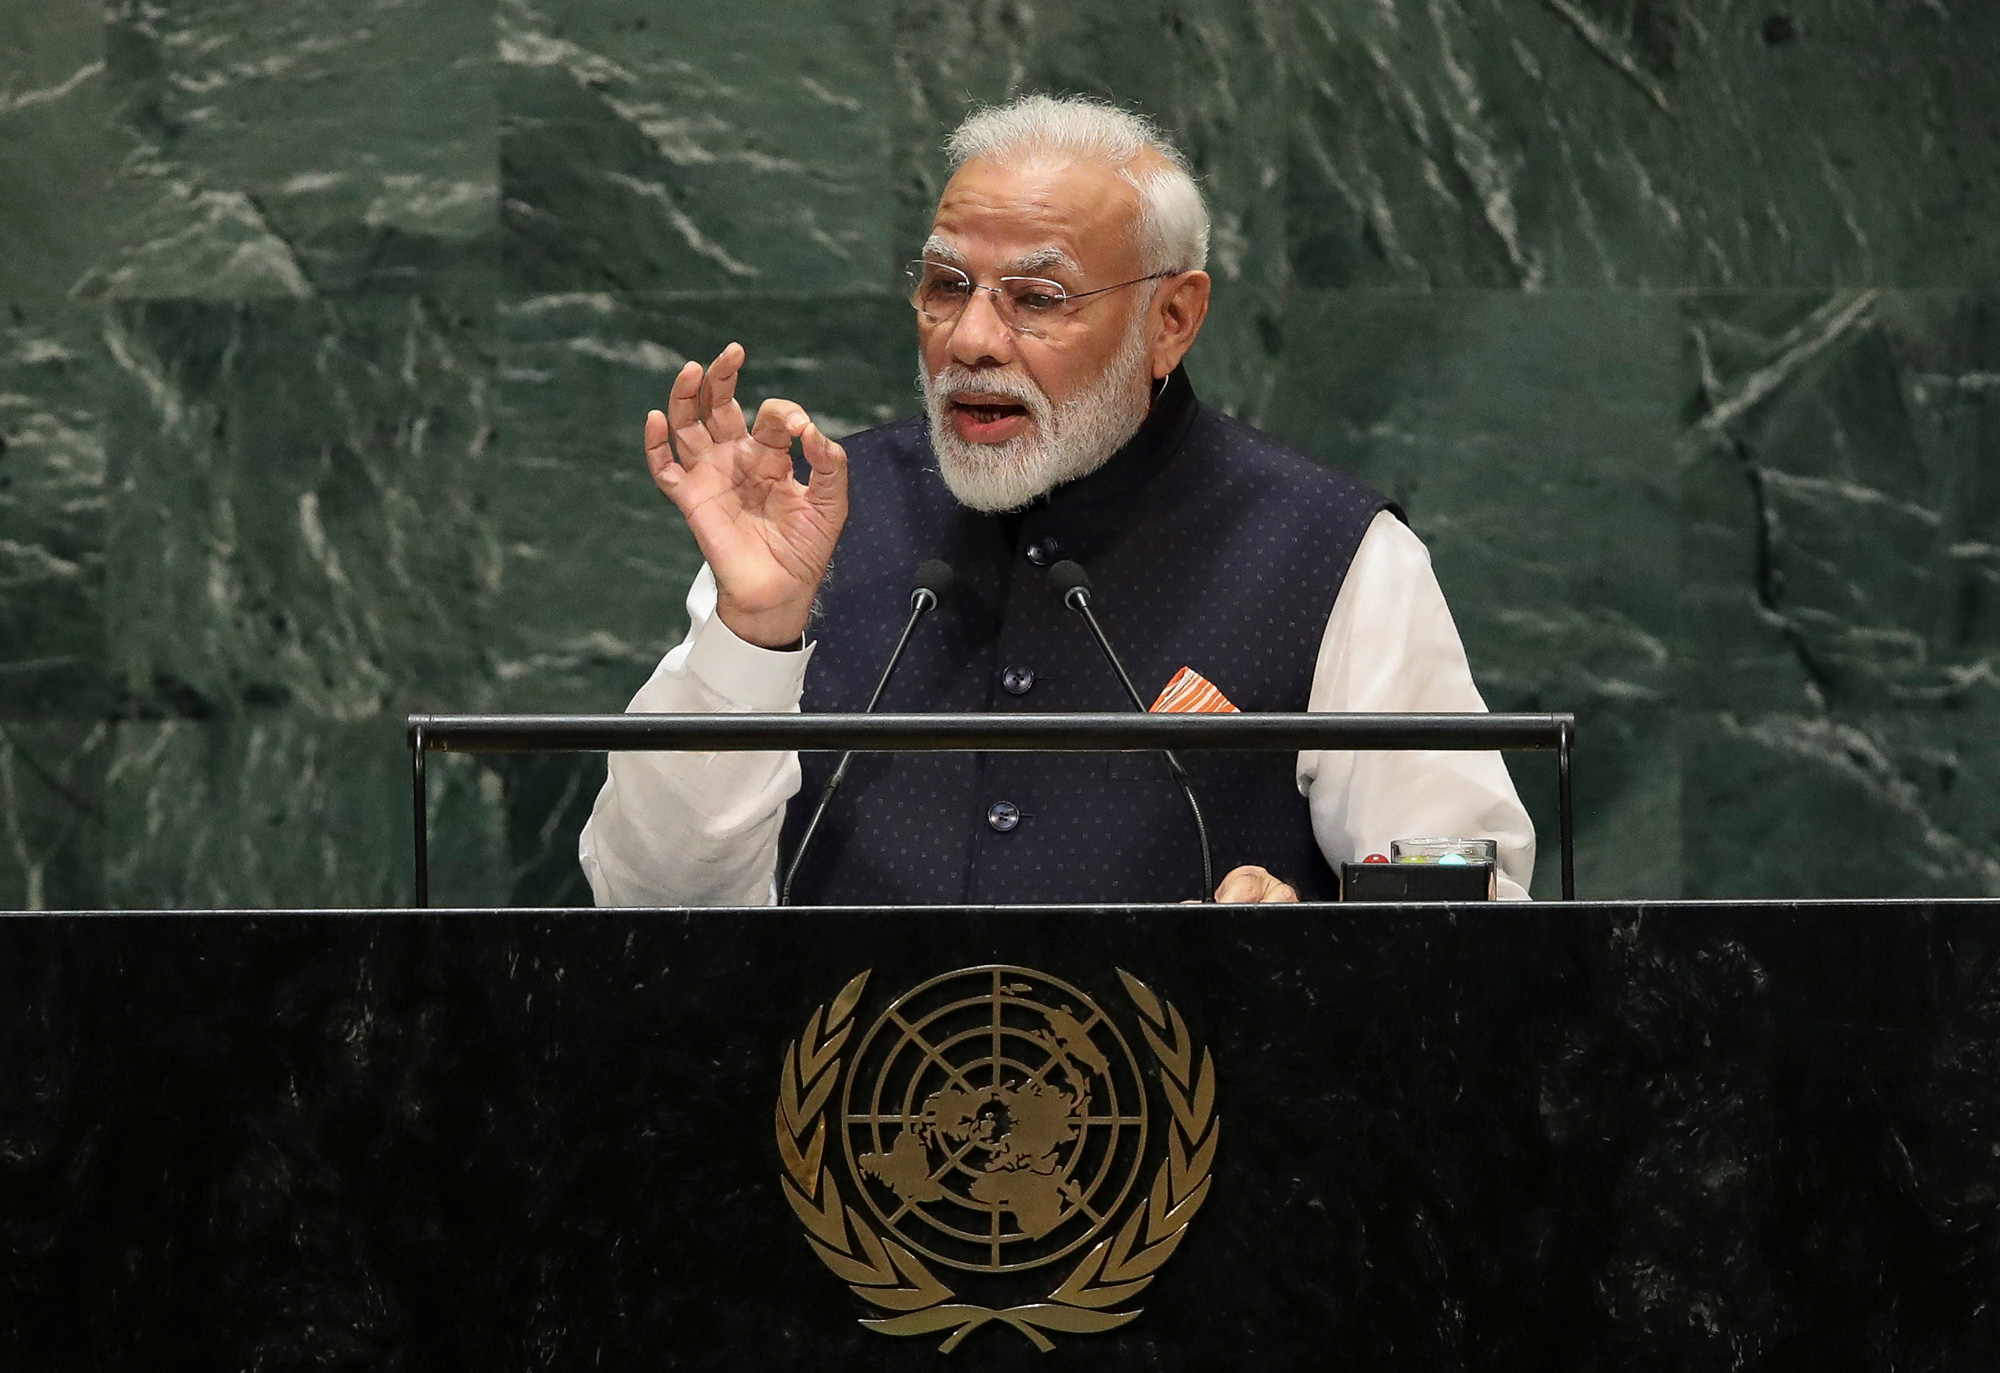 Indian Prime Minister Narendra Modi spoke at the UN headquarters in New York on September 27, 2019. 